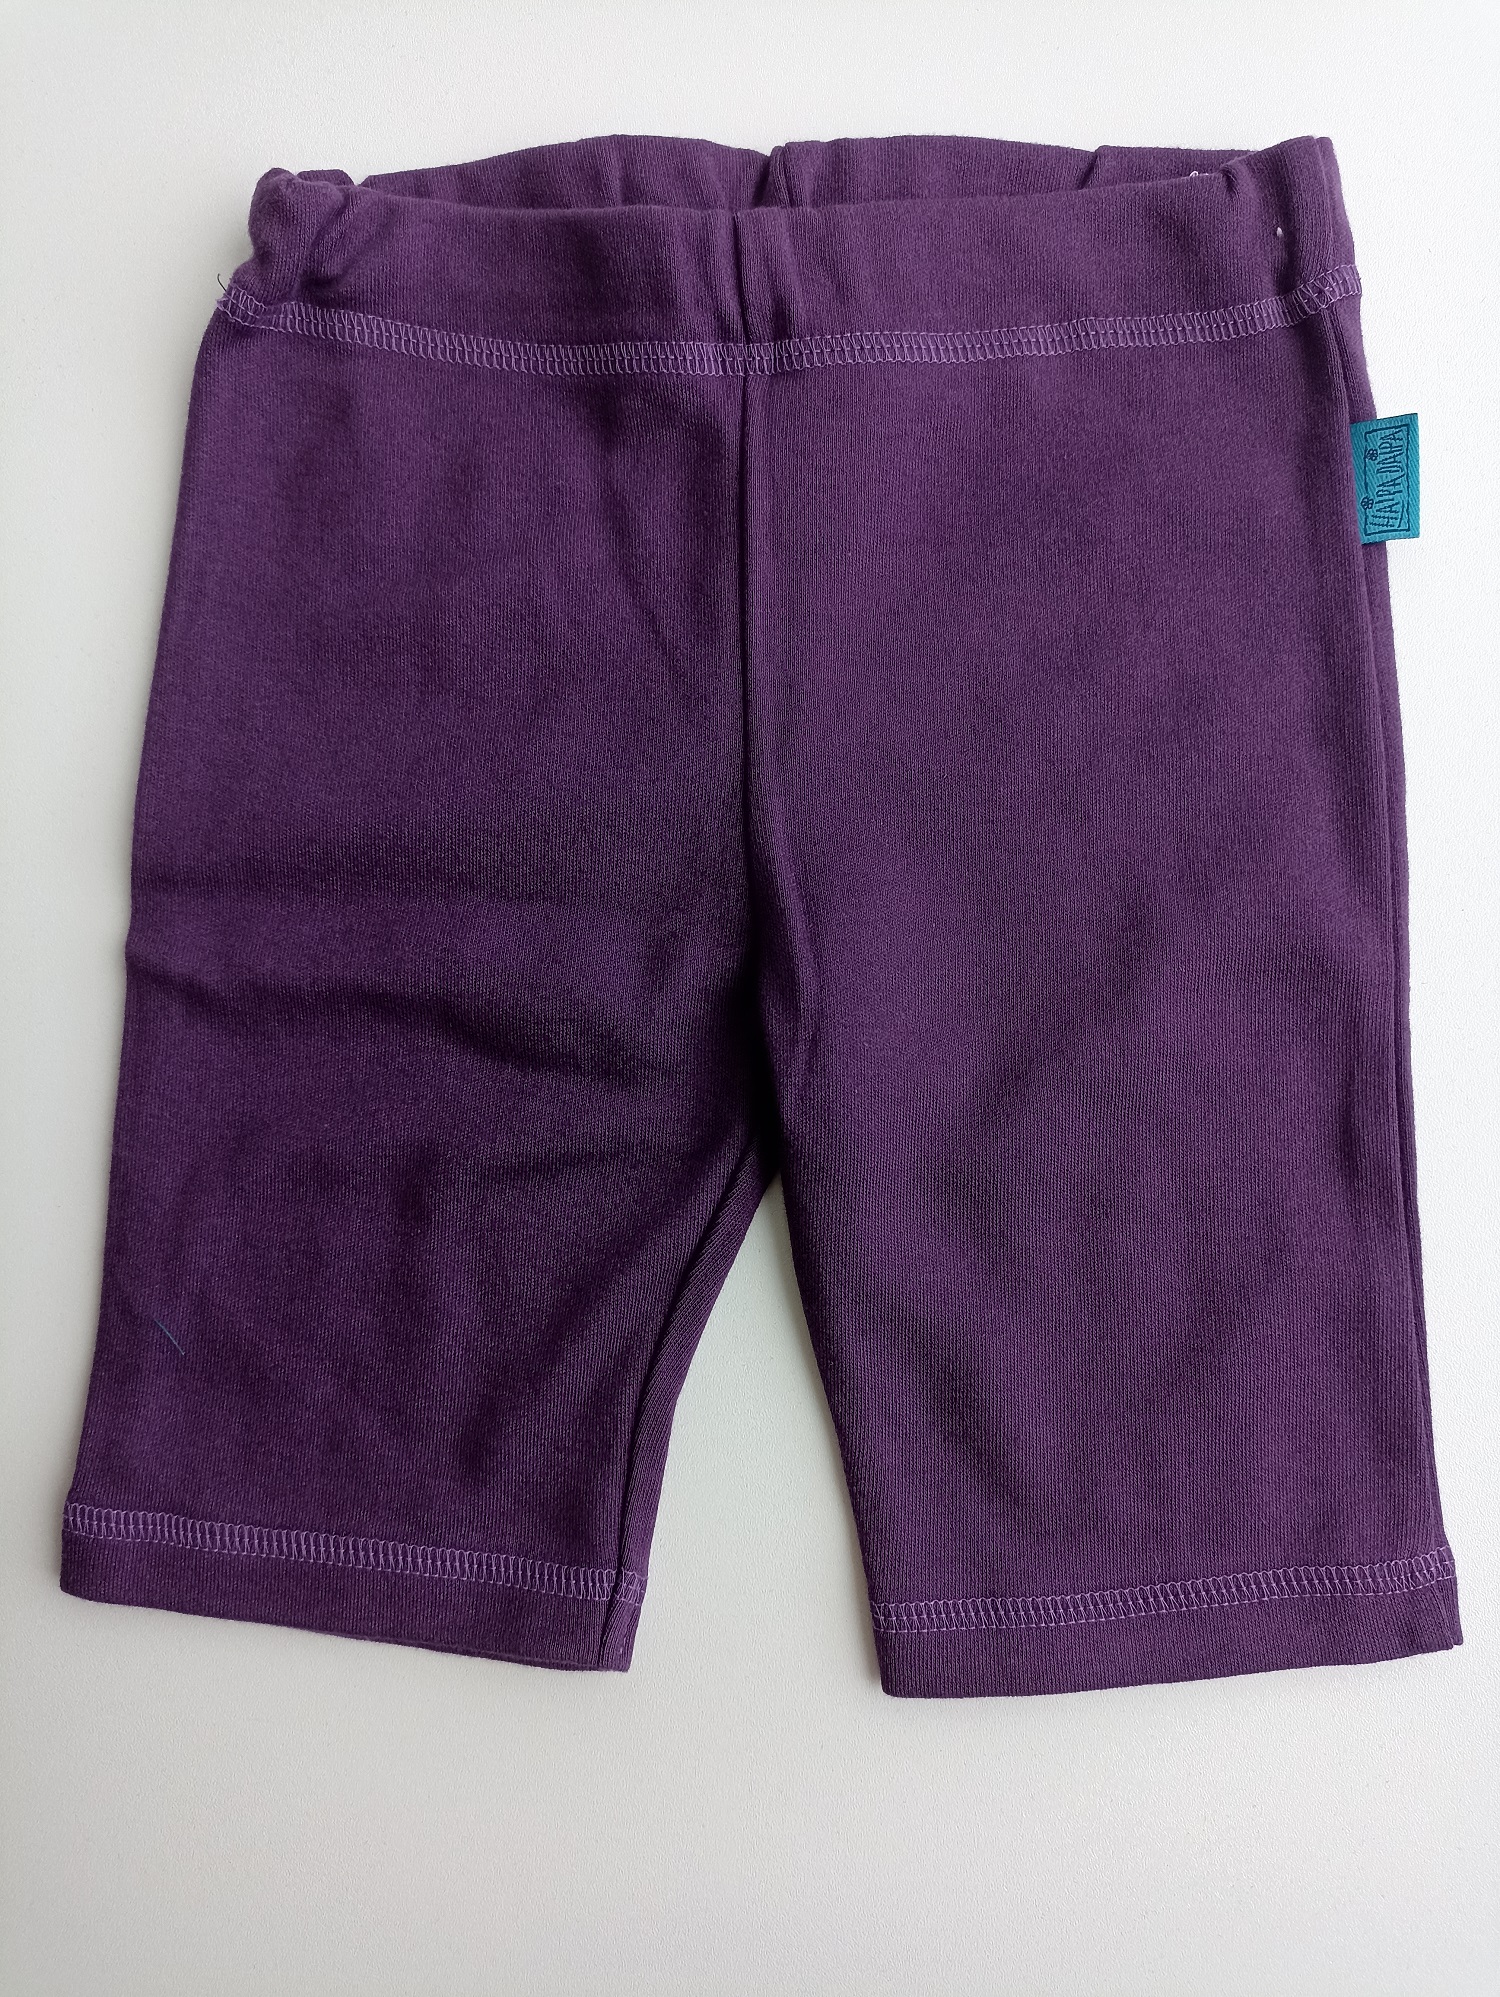 Infant sweatpants made of organic cotton, purple